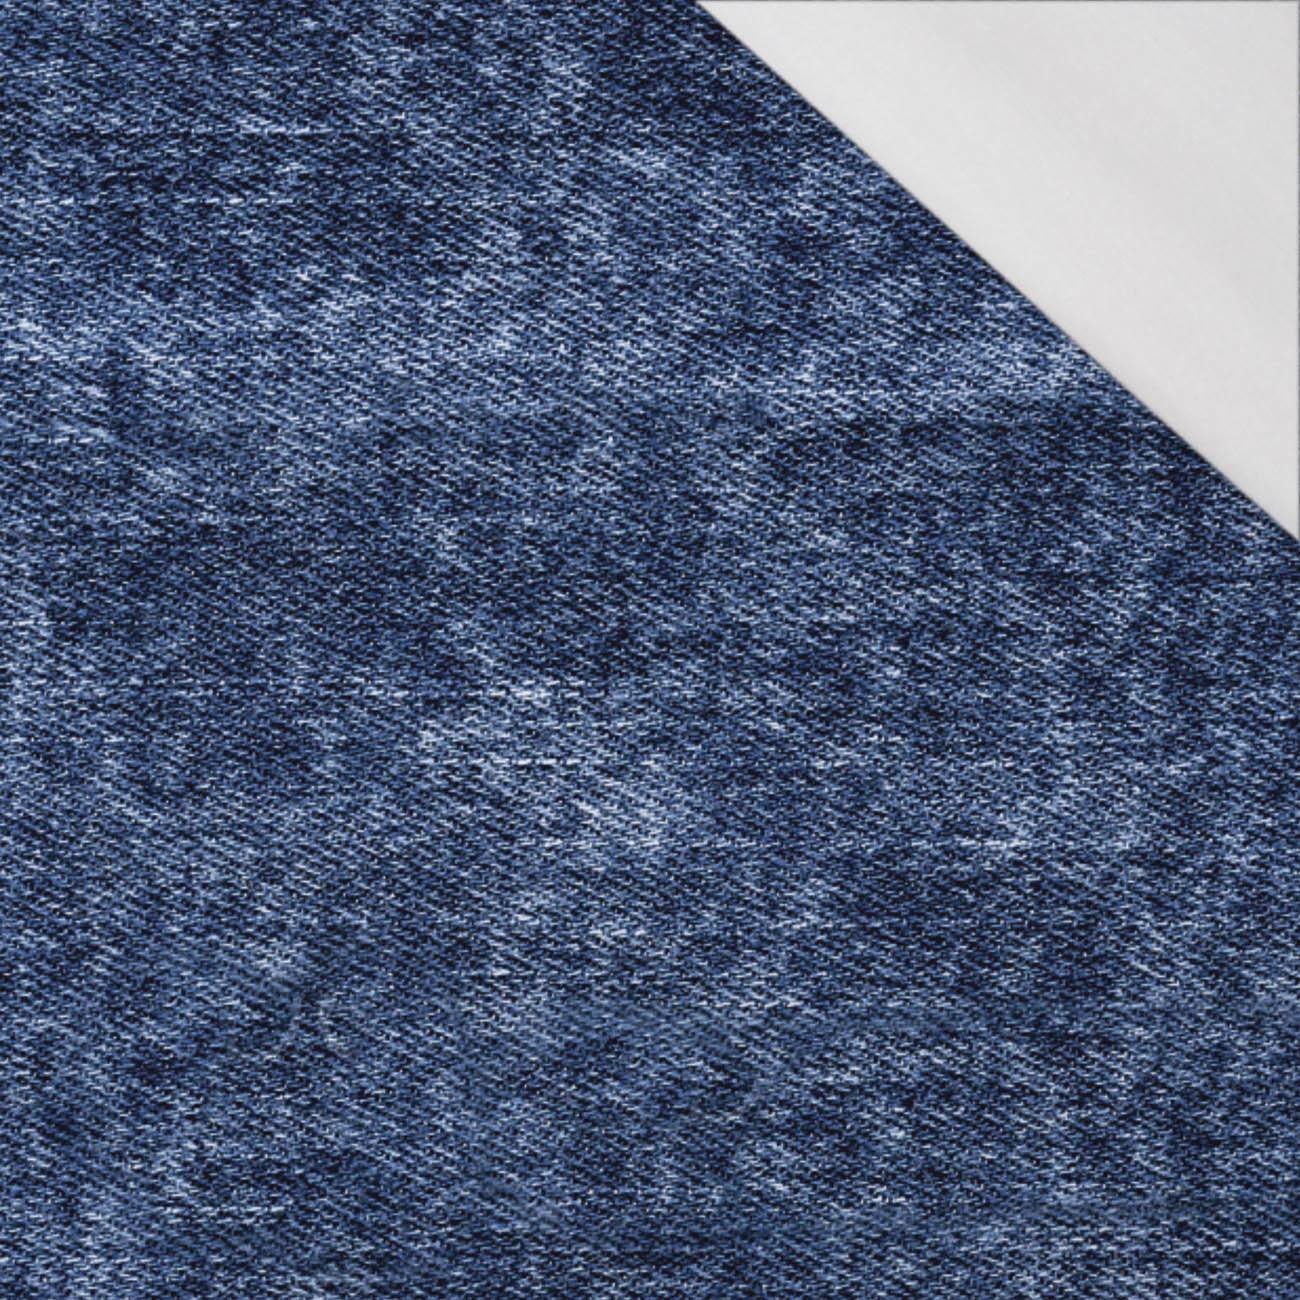 VINTAGE LOOK JEANS (dark blue) - single jersey with elastane 